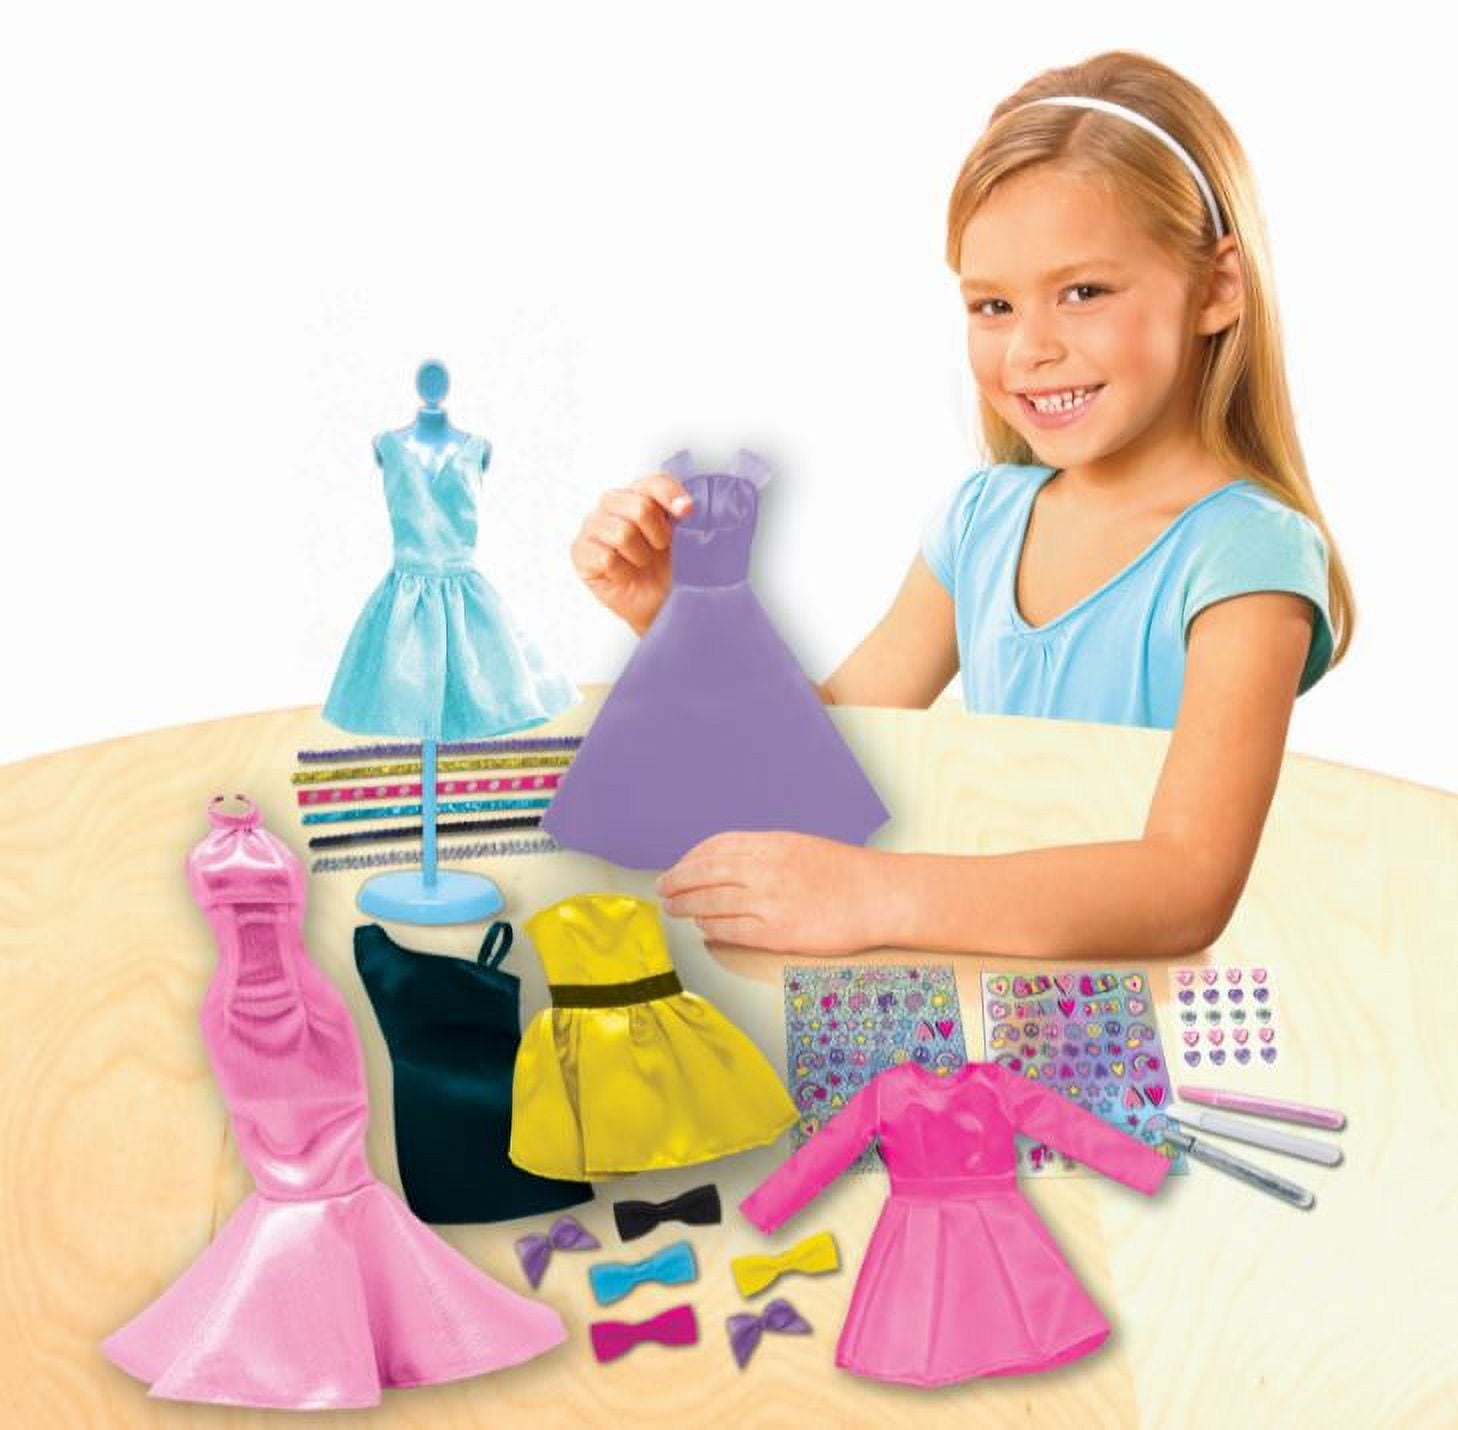 Breatoi! Barbie Be A Fashion Designer Set for The Kids Age 3+